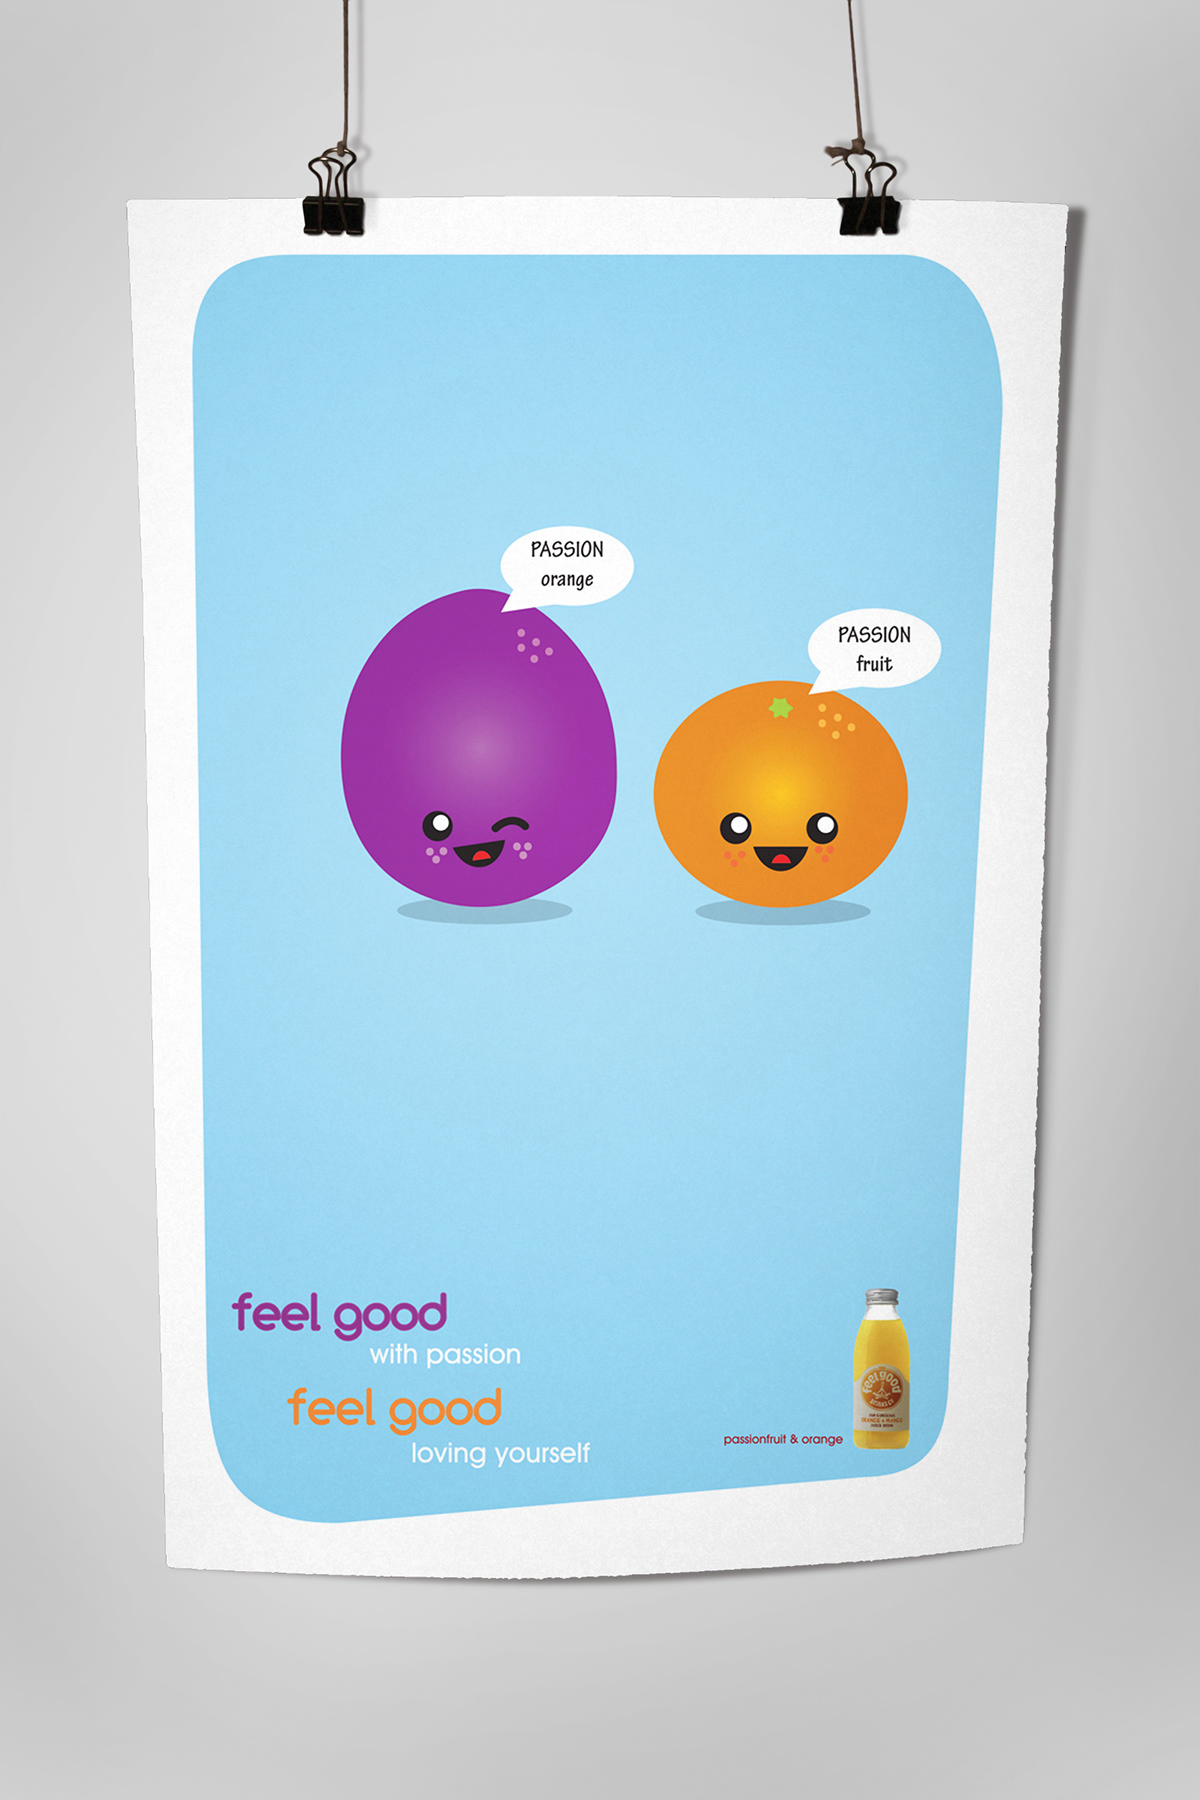 feel good juice campaign cartoon